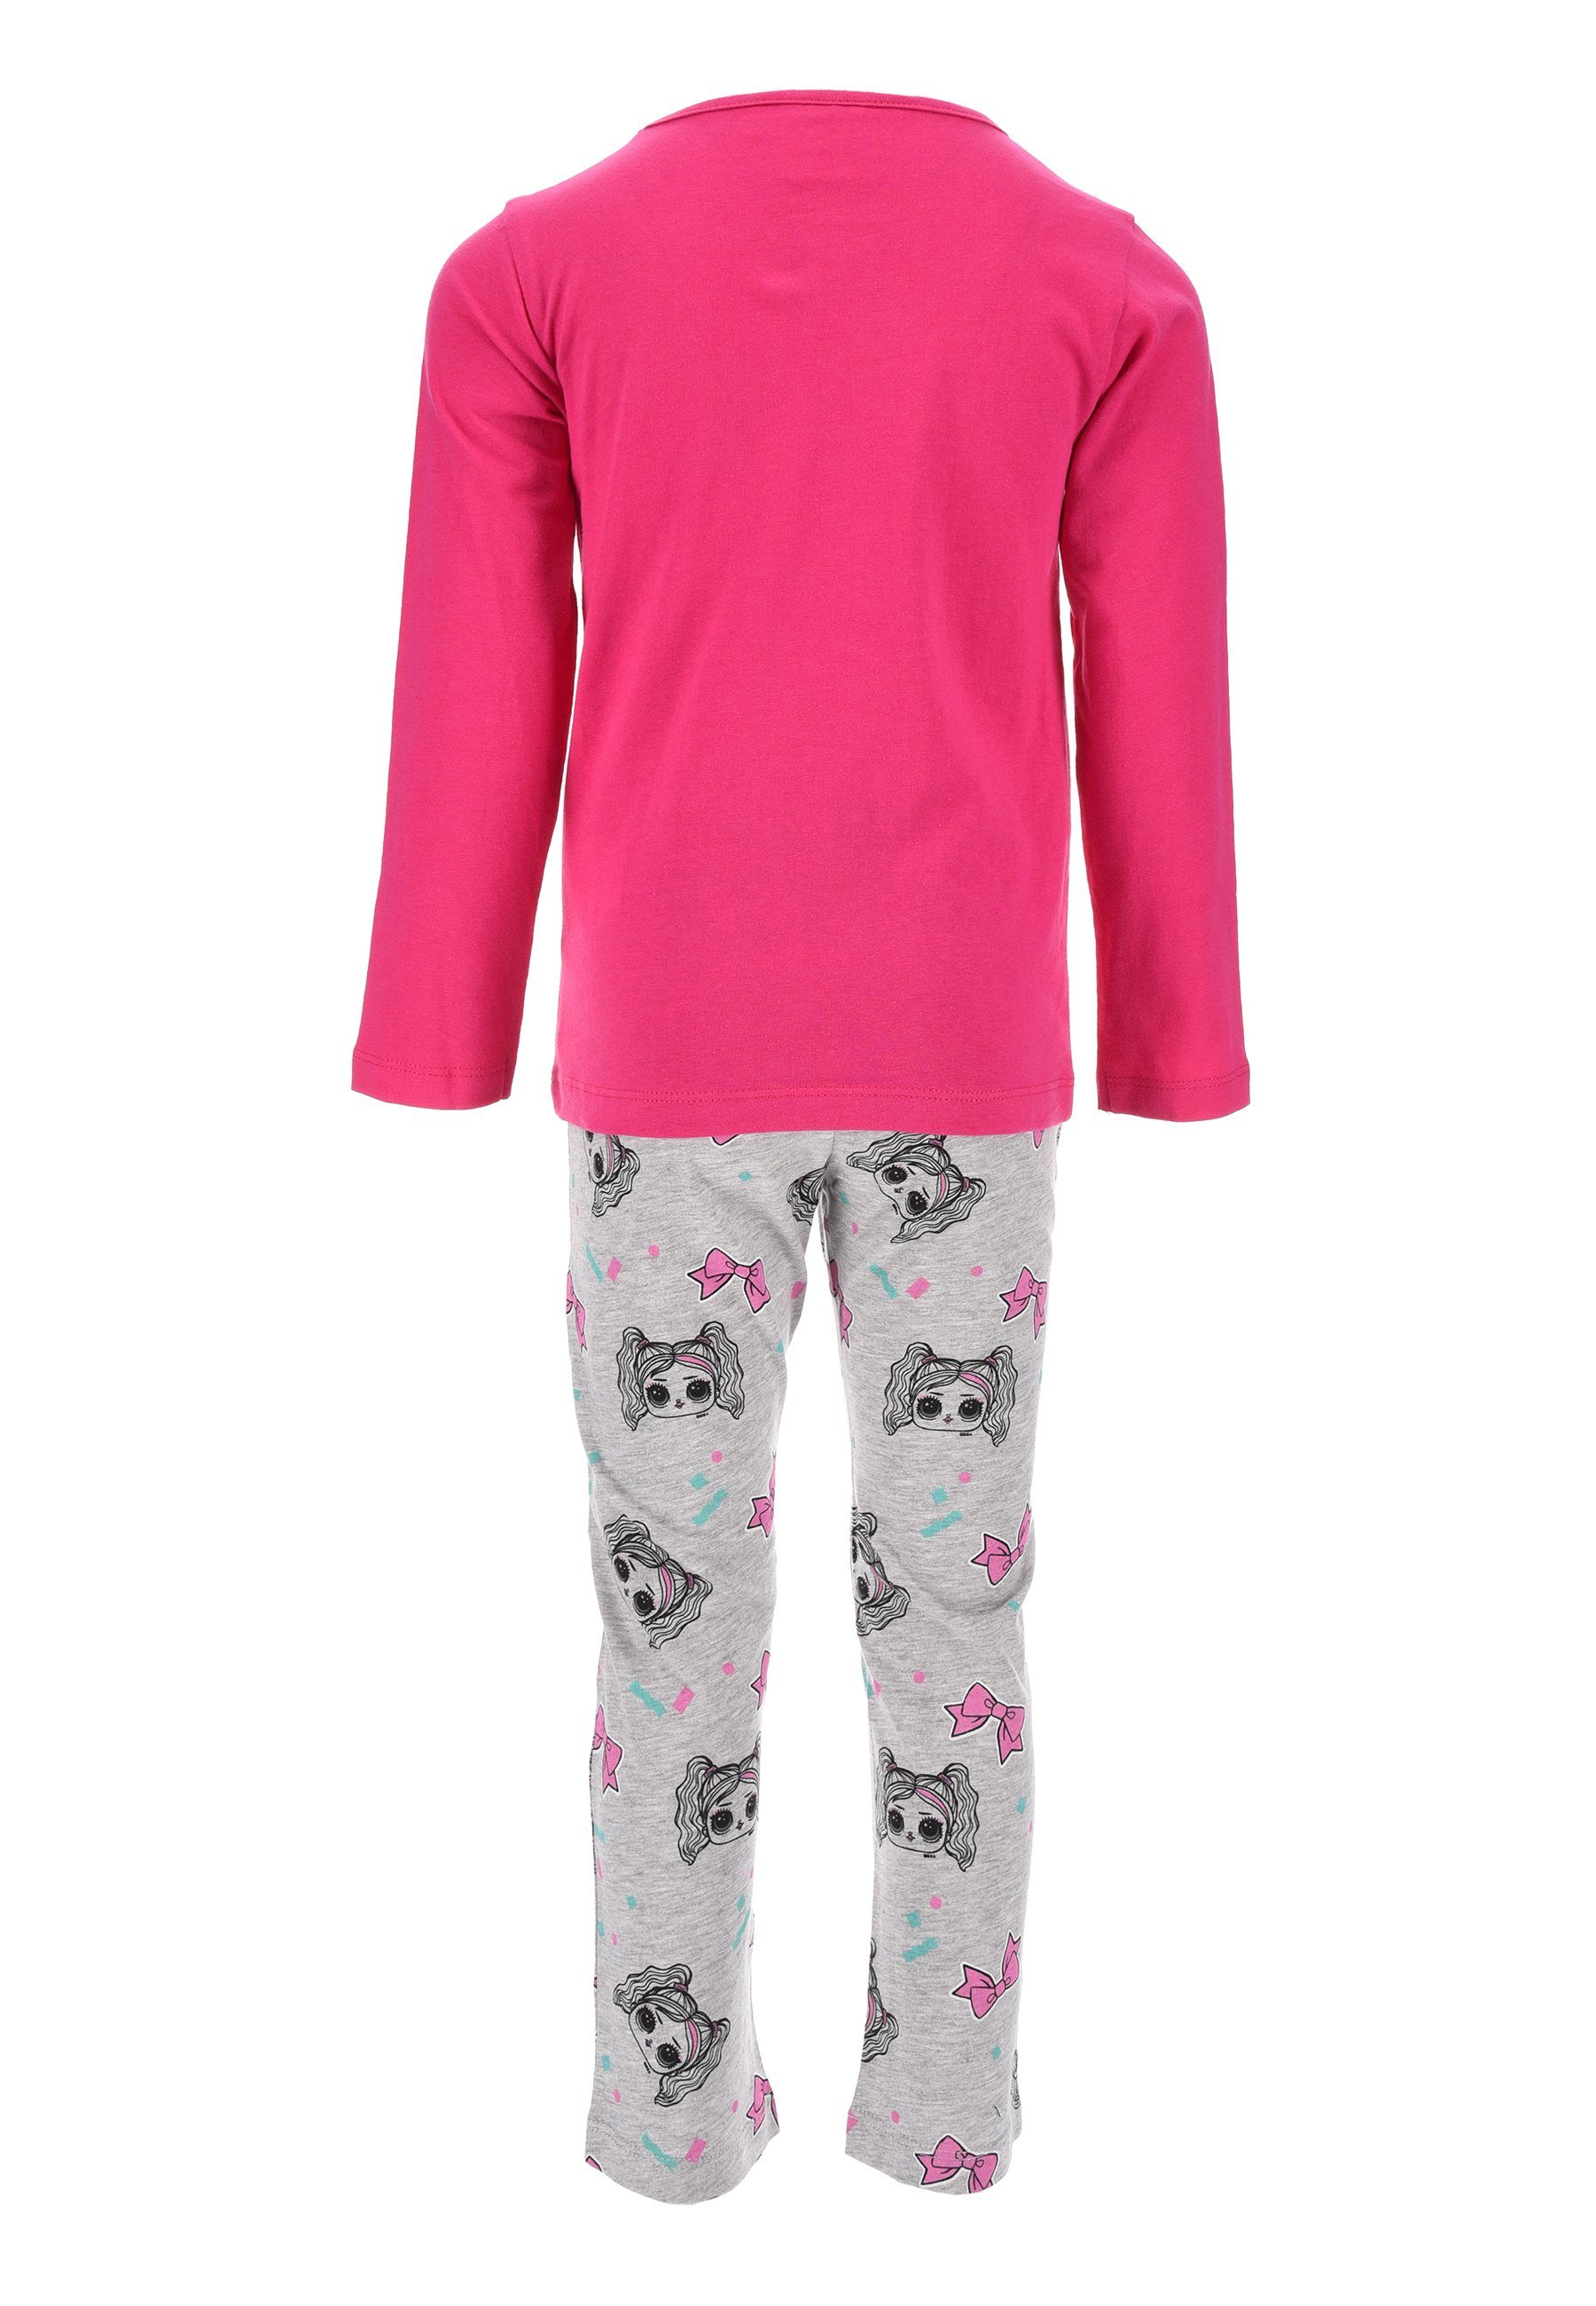 L.O.L. SURPRISE! Schlafanzug Kinder Mädchen Schlaf-Hose Langarm Pyjama tlg) Schlafanzug + Pink Shirt (2 Kinder